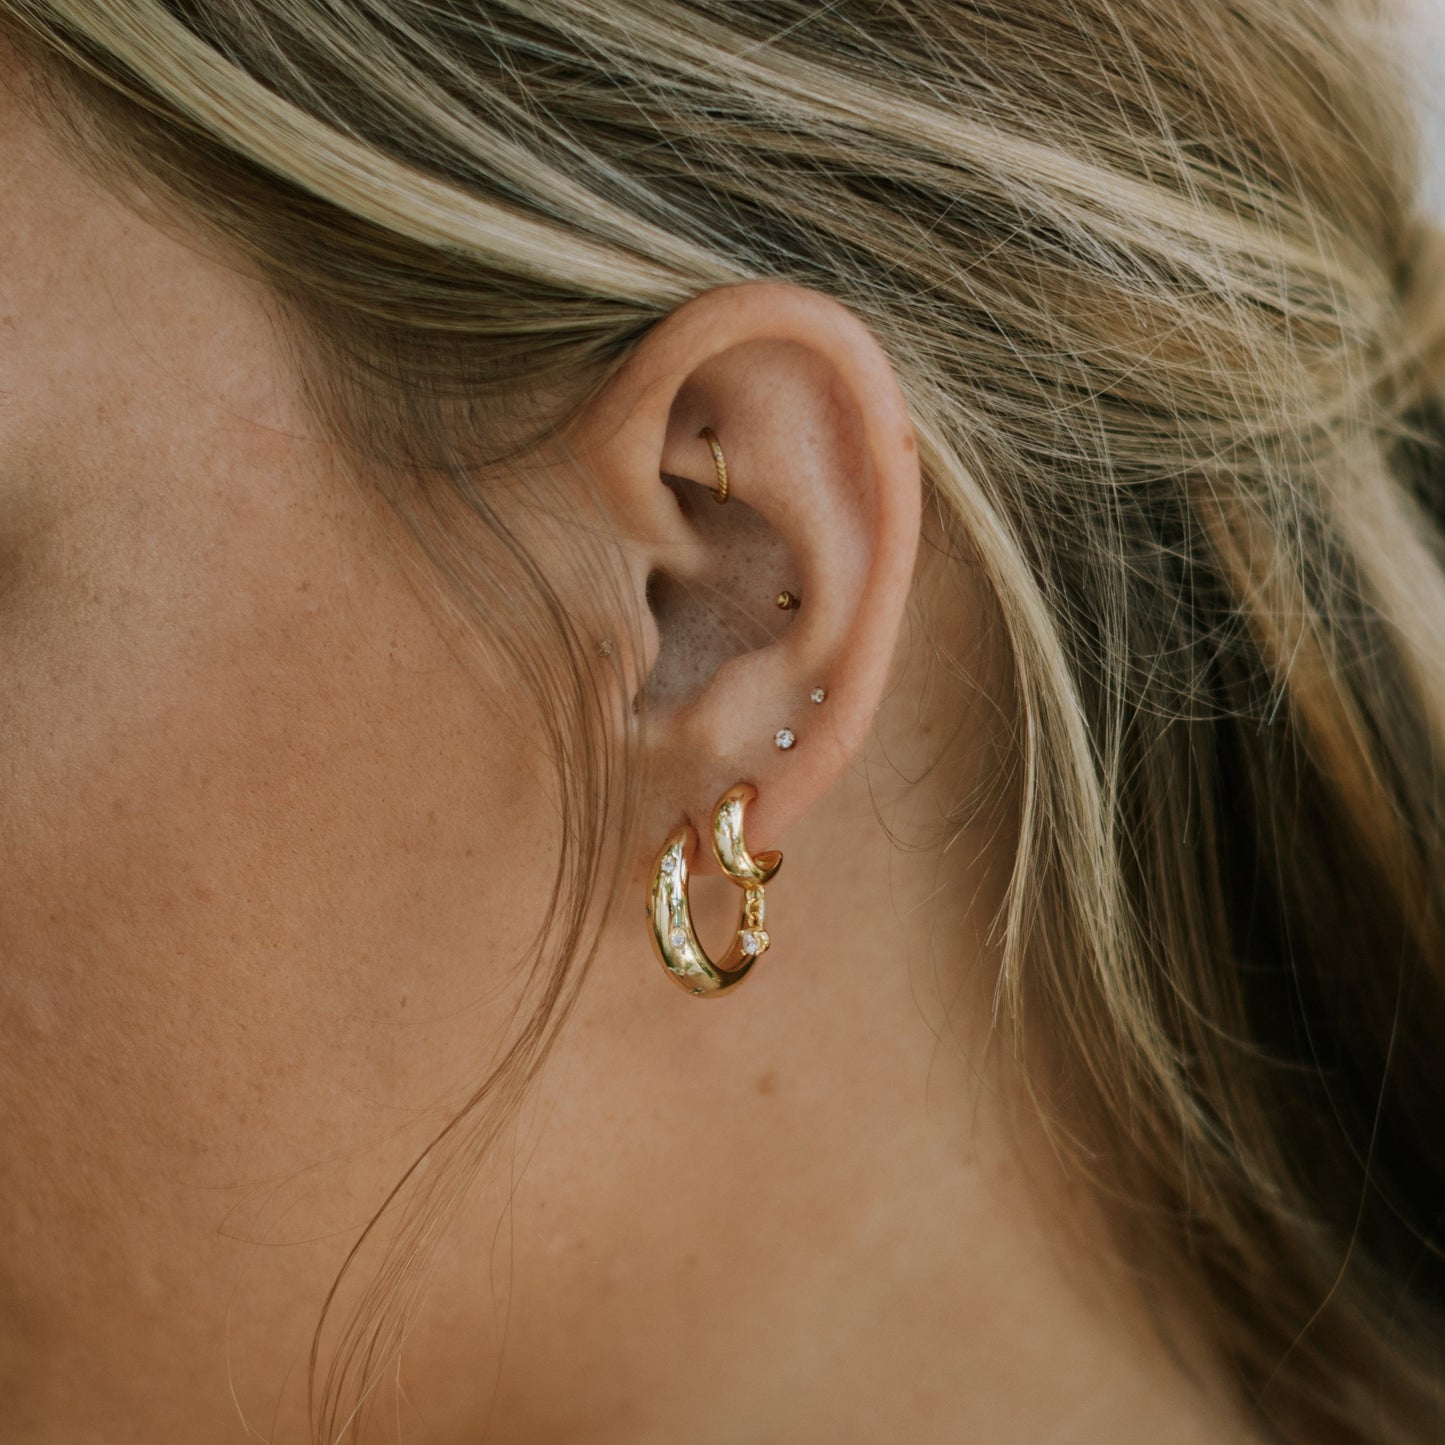 Cara earrings